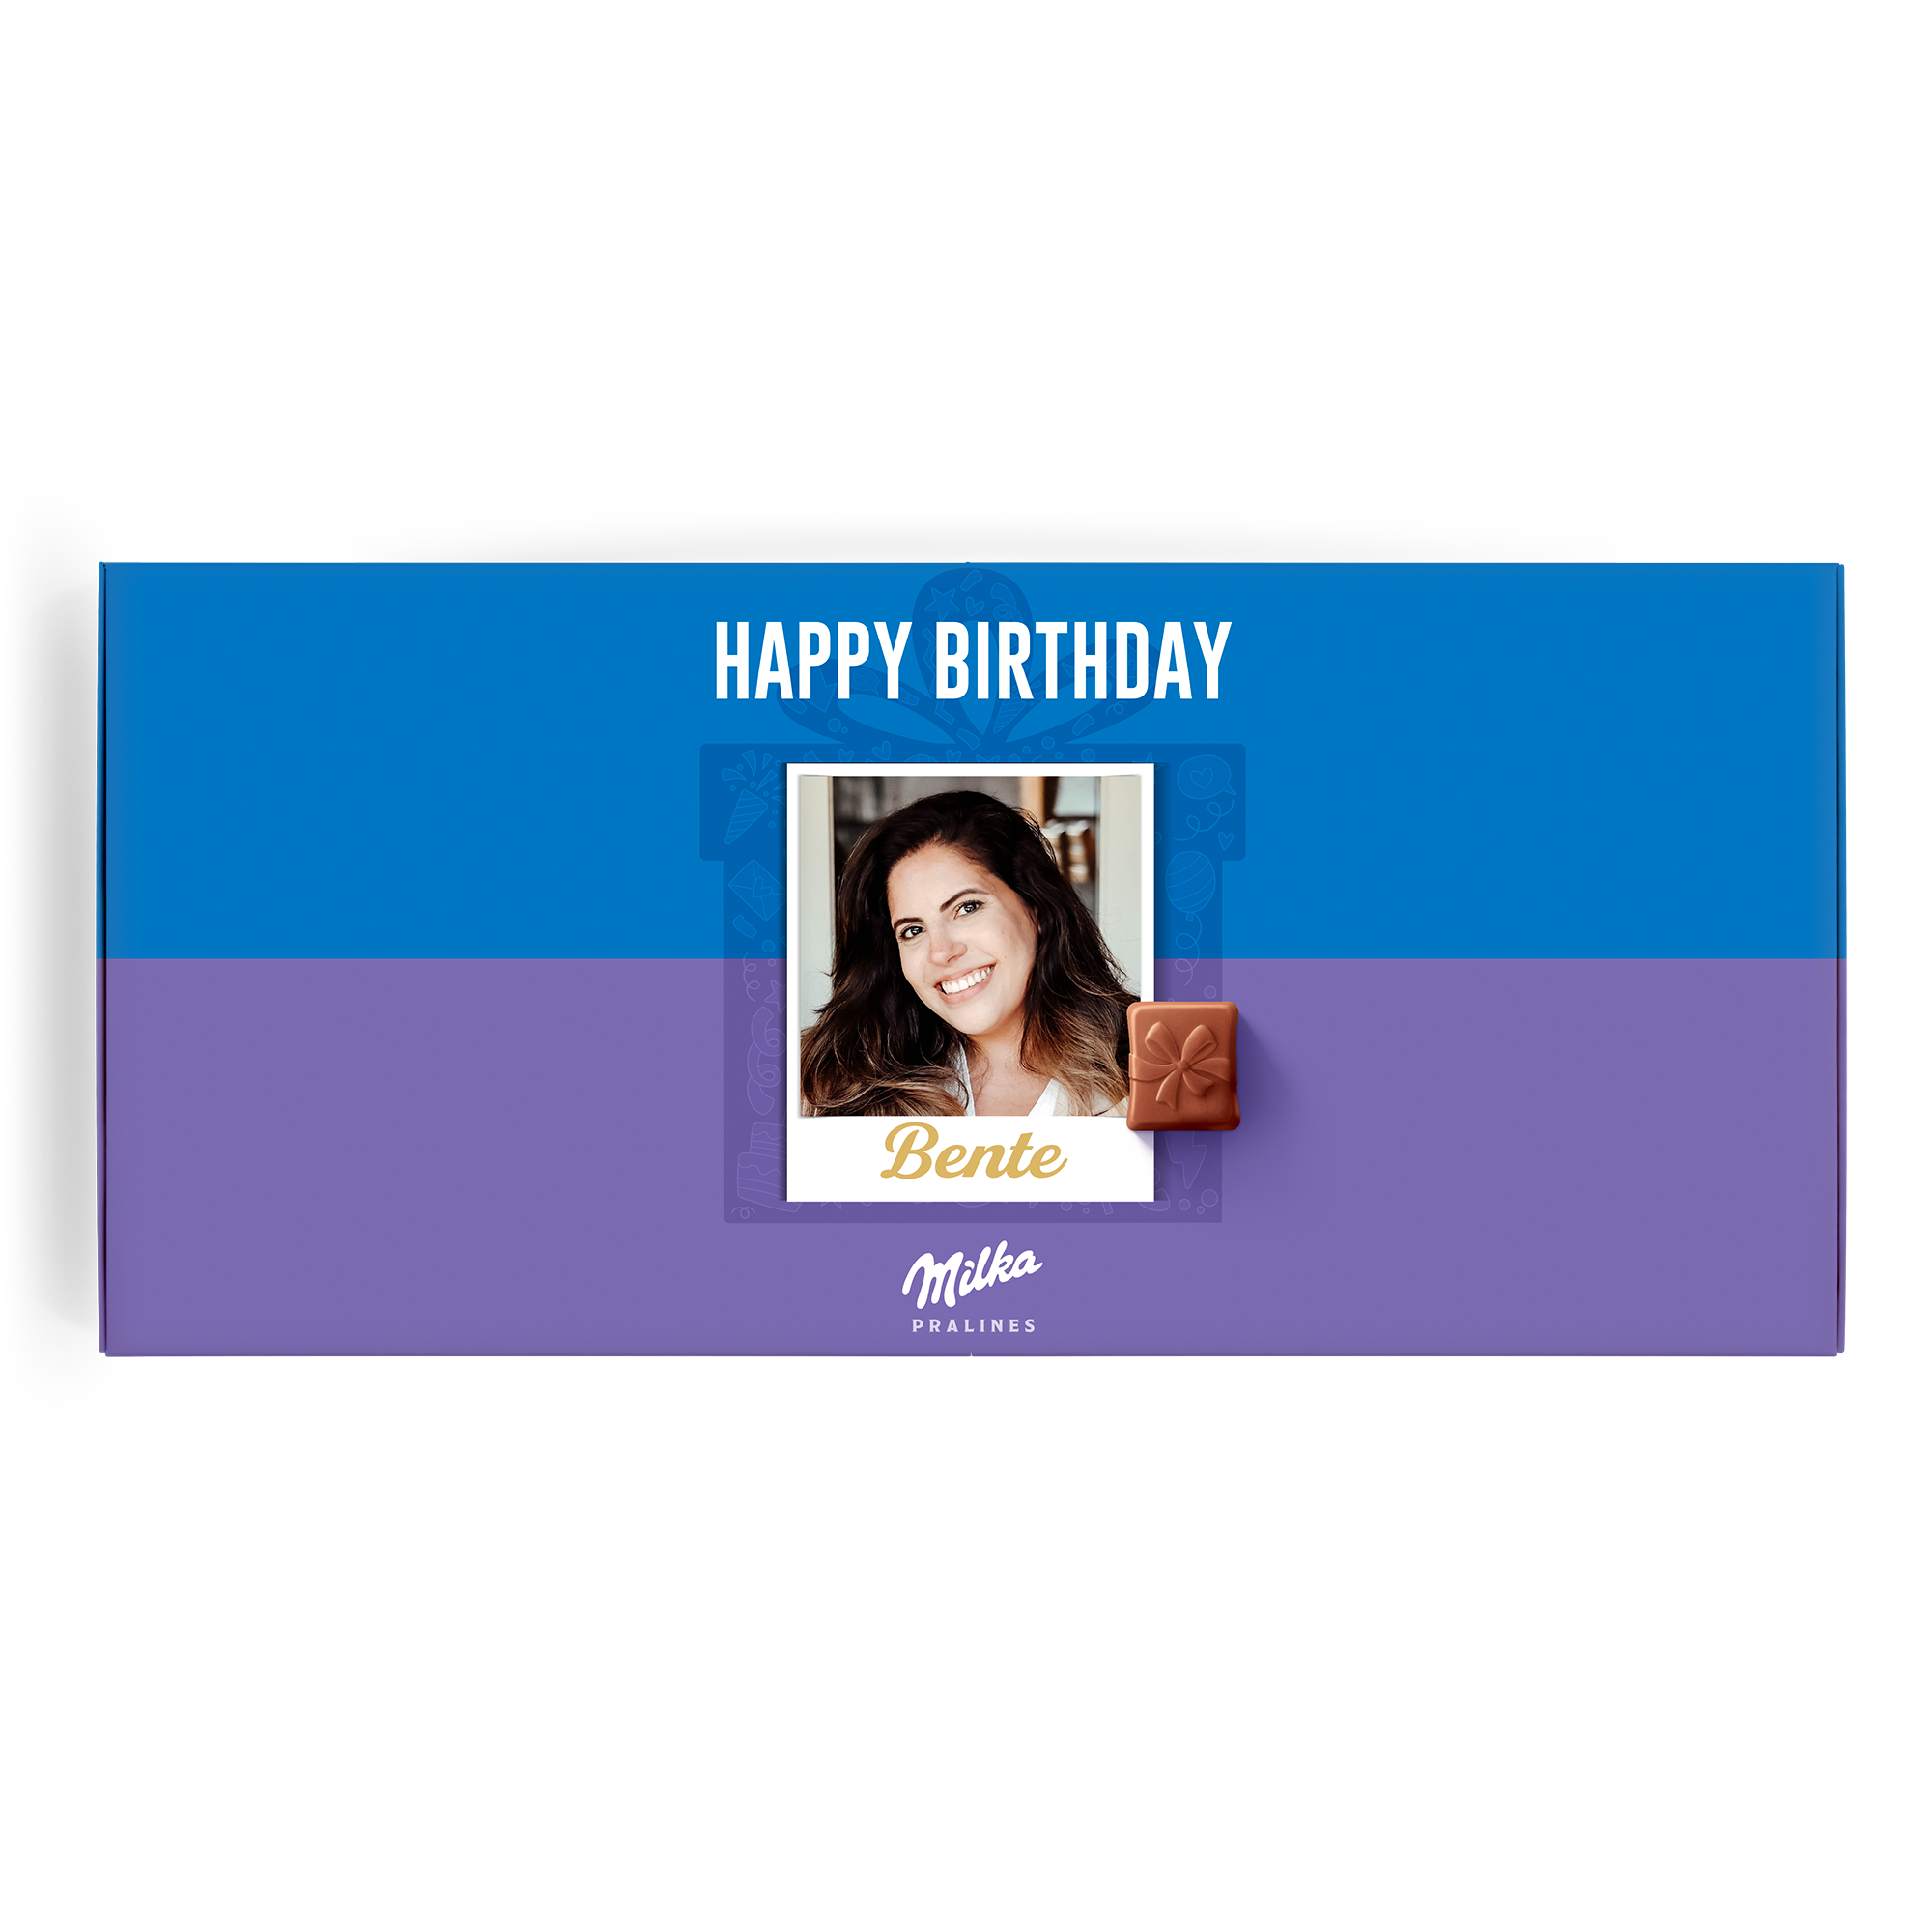 Milka giftbox - Birthday